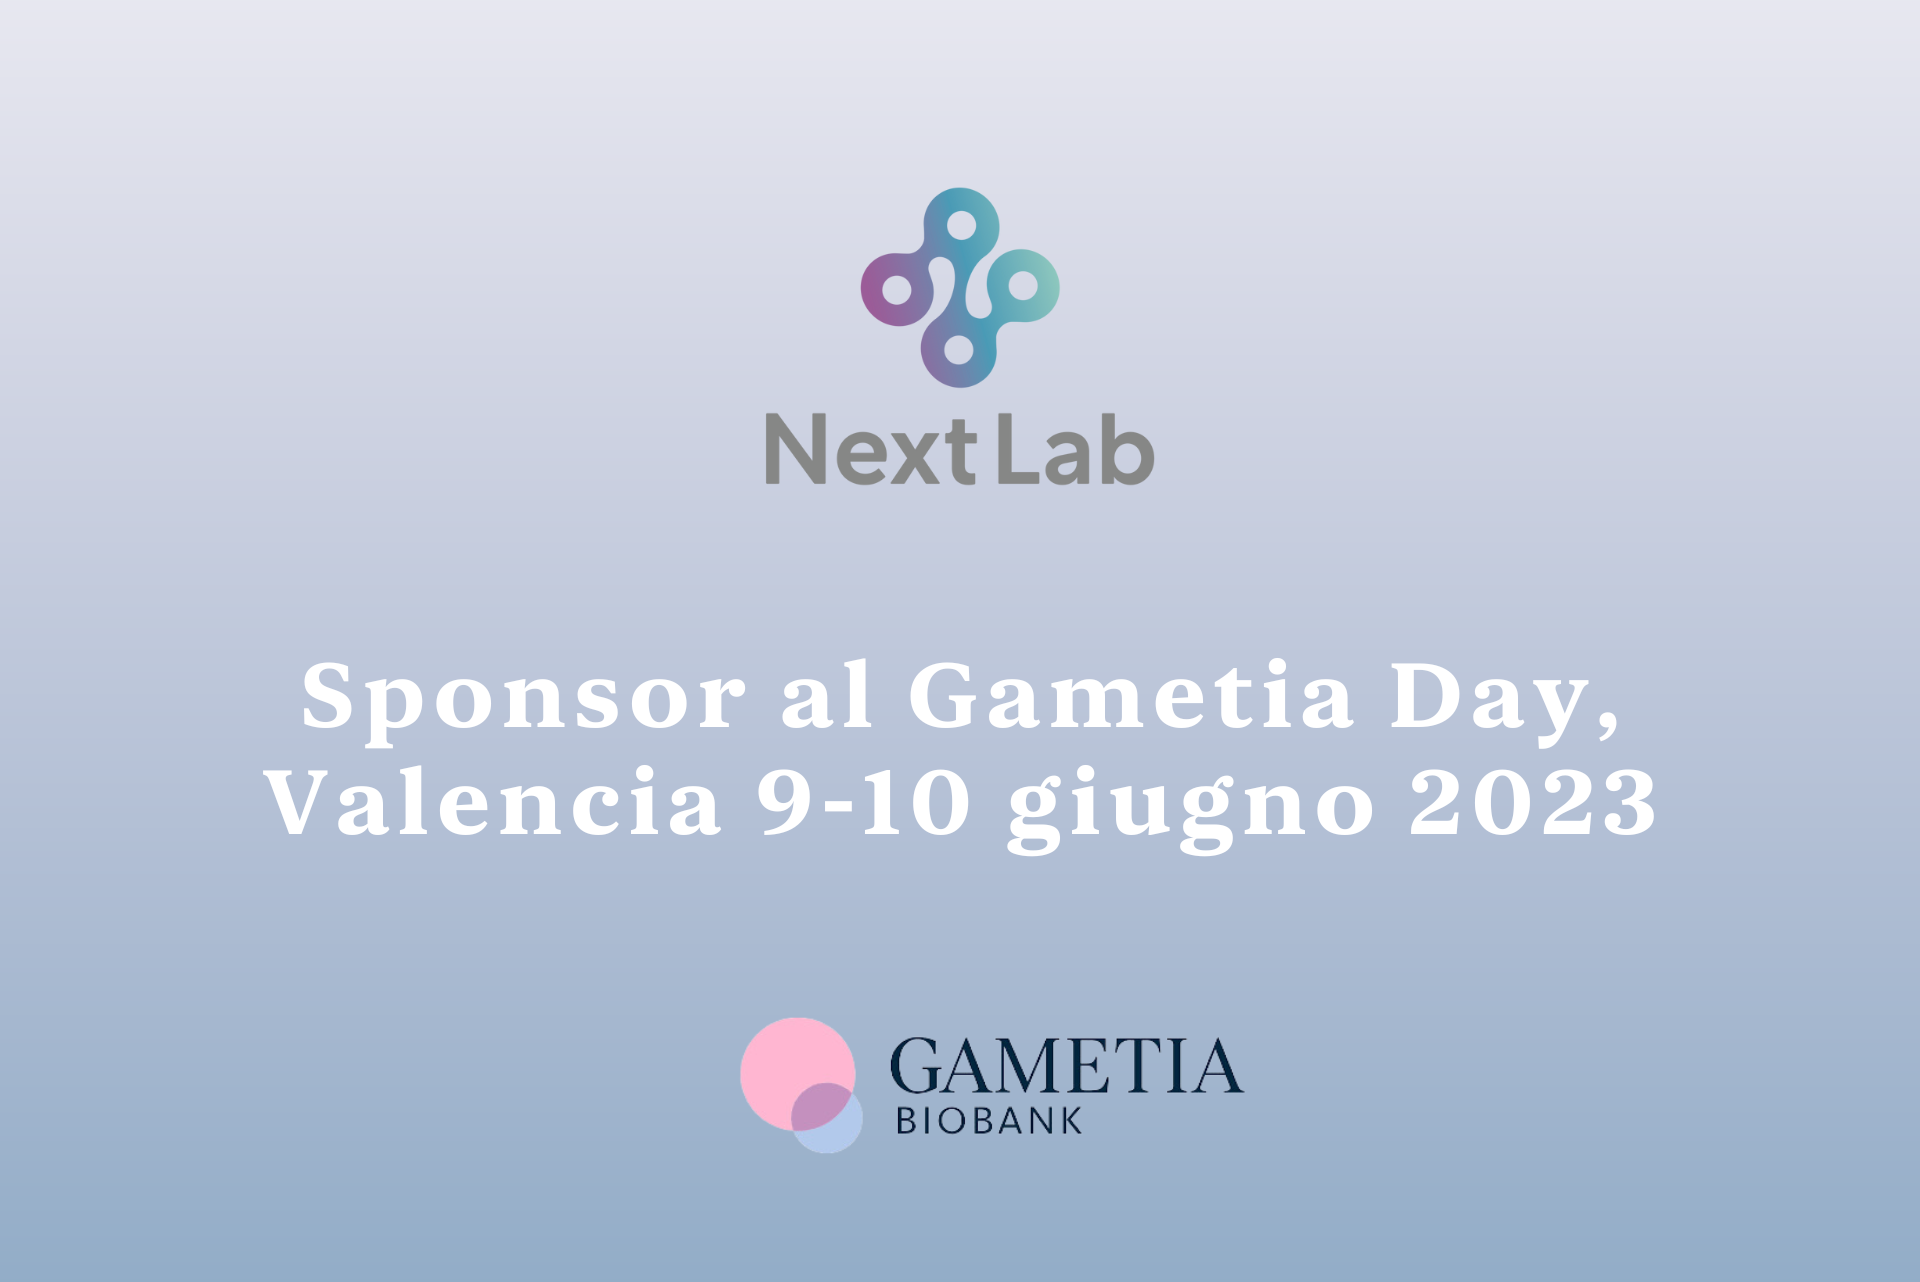 Next Lab sponsor al Gametia Day